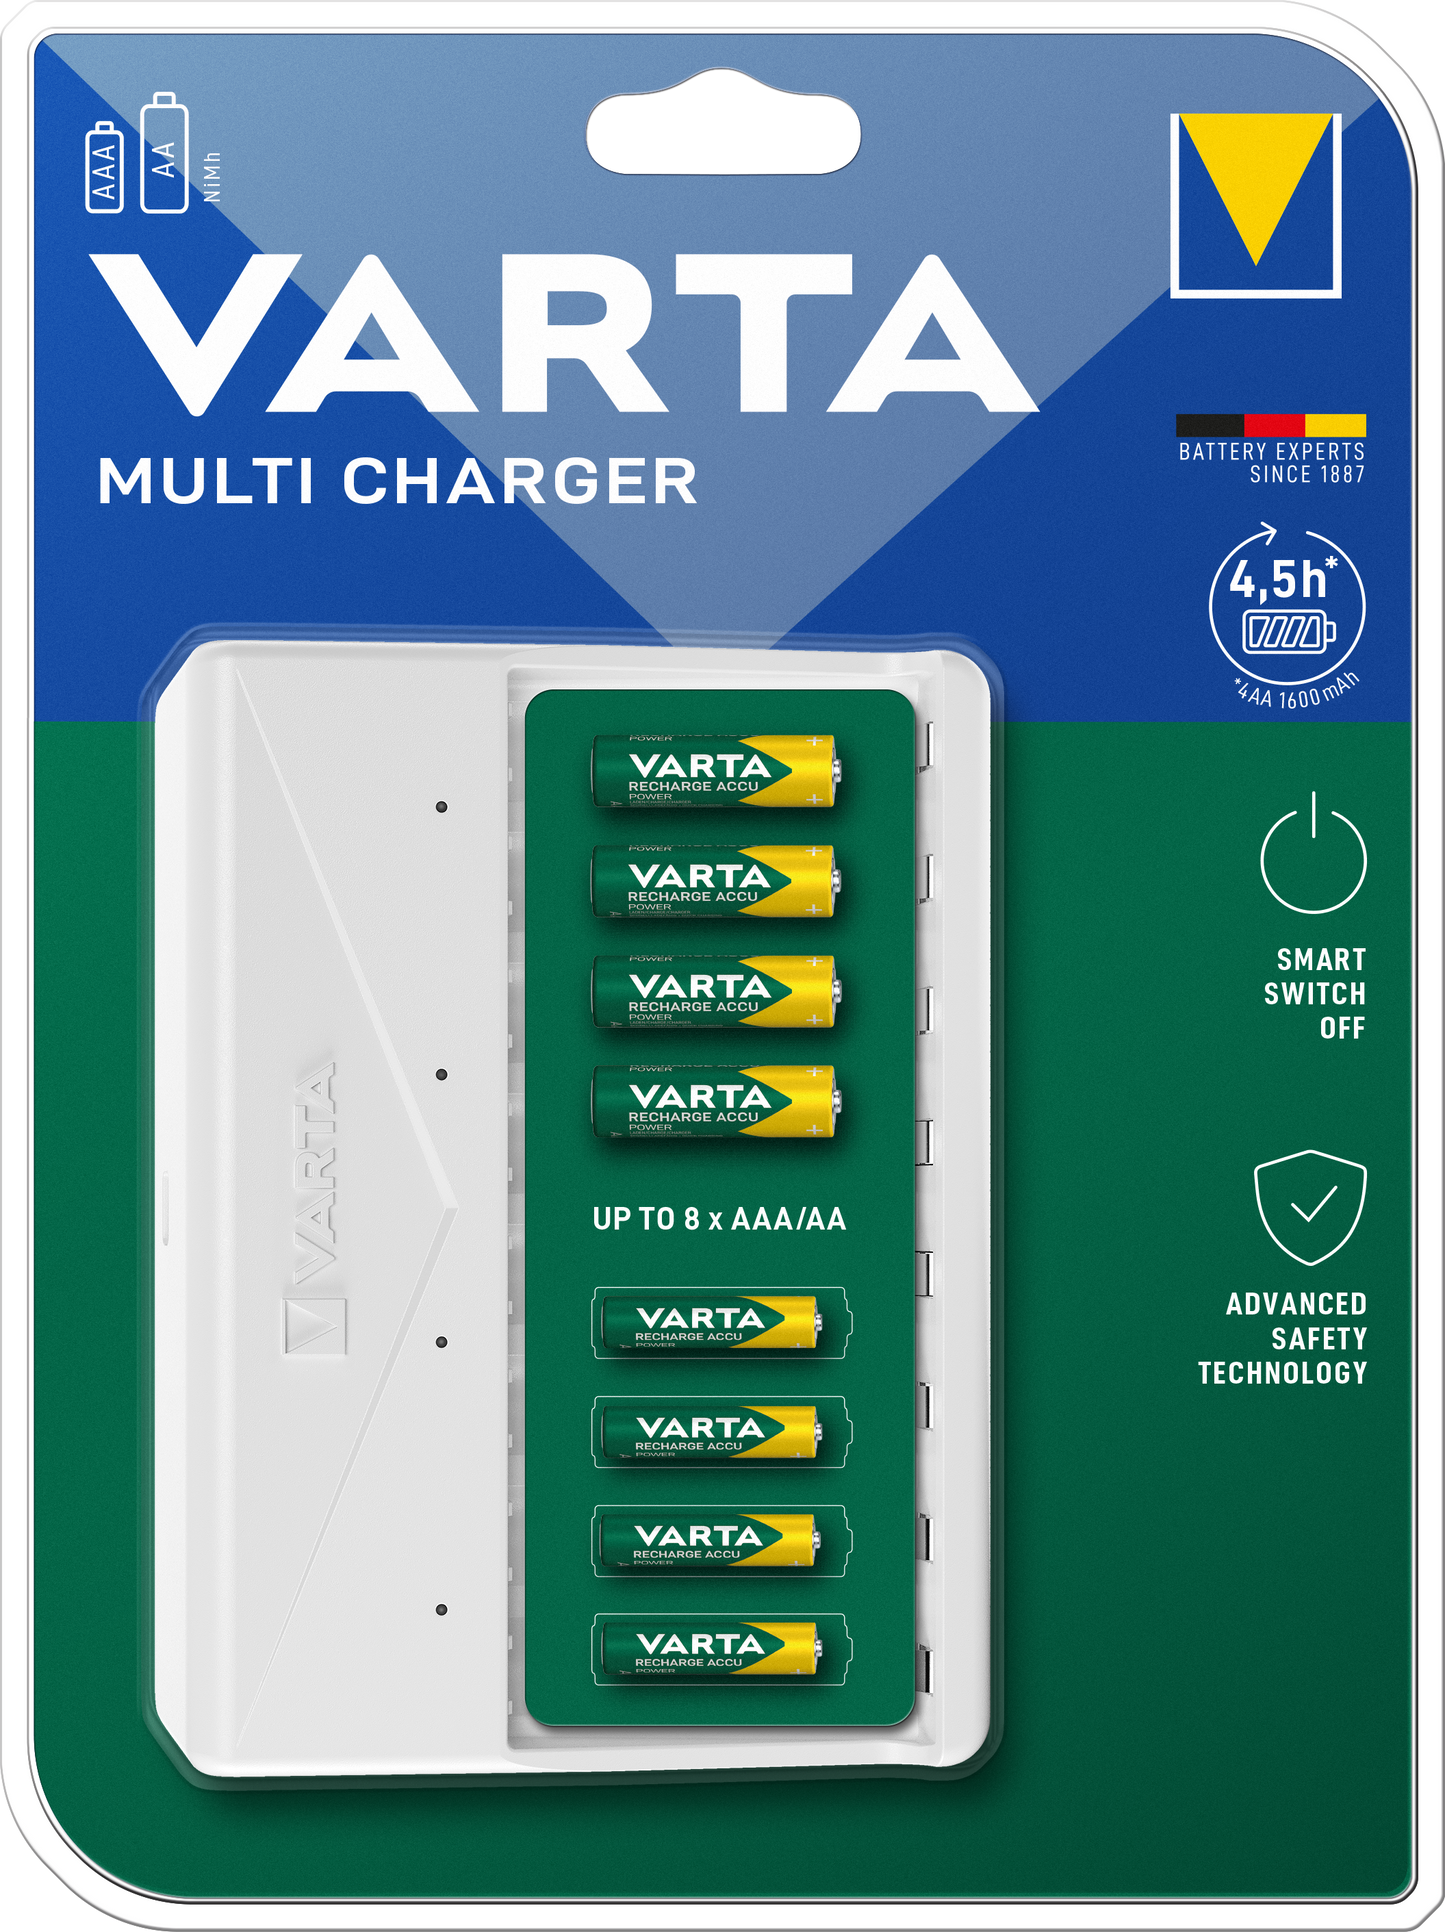 VARTA - Multi Charger